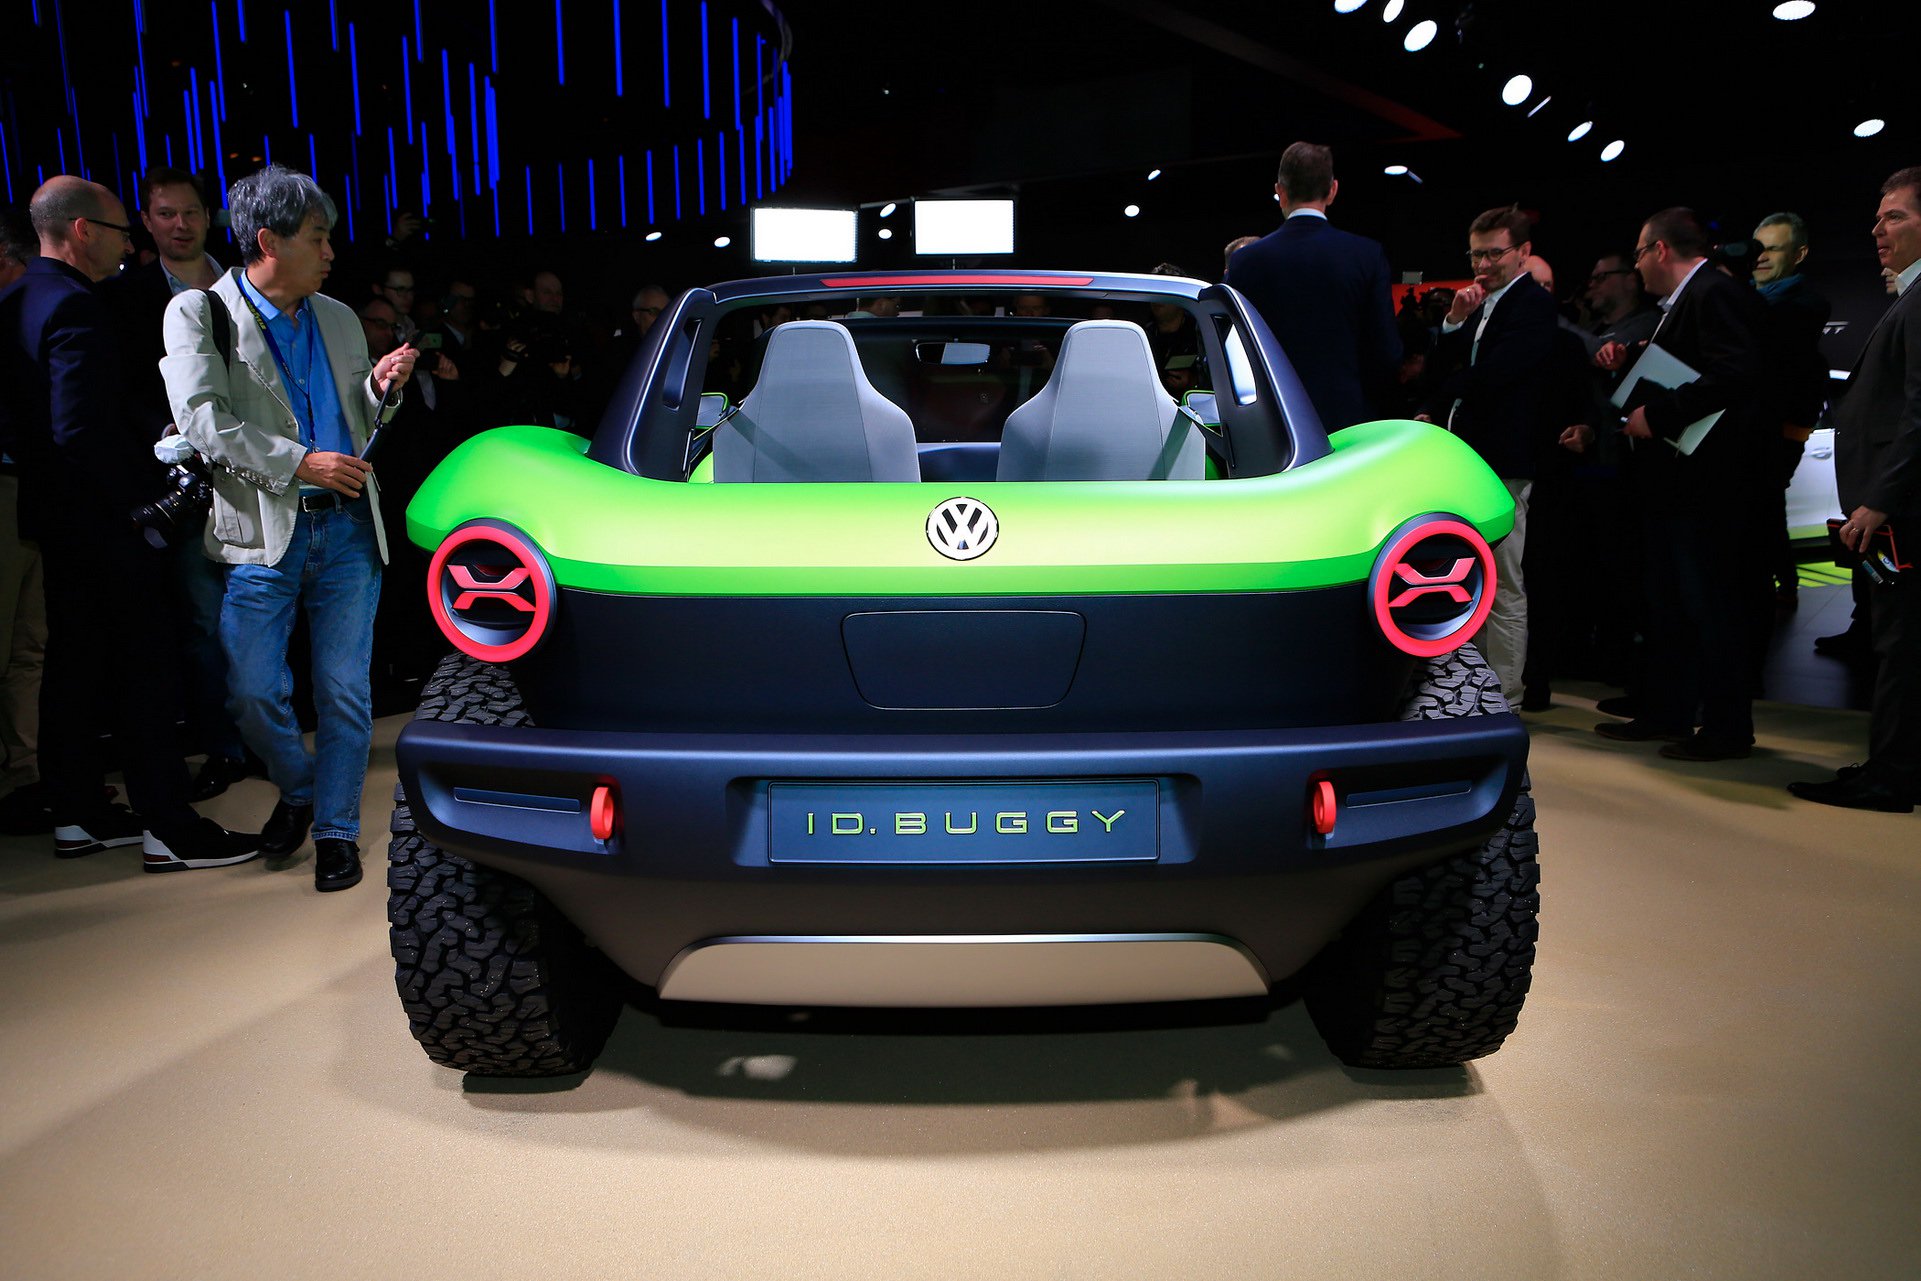 Volkswagen, 250 km menzile sahip elektrikli ID Buggy konseptini tanıttı